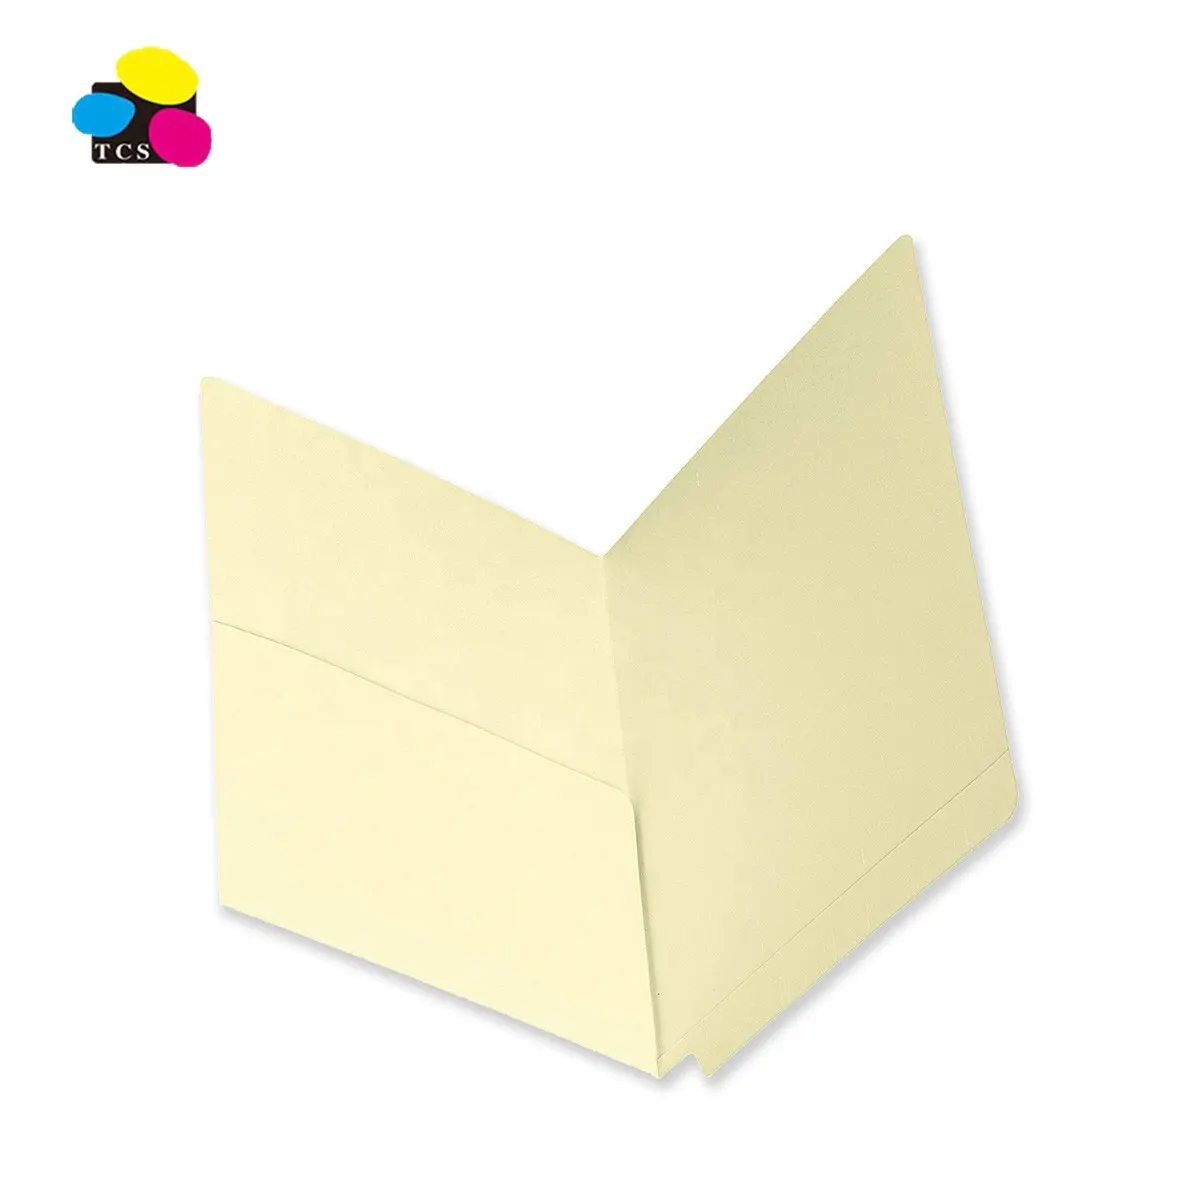 Ebay Top Sale 11Pt Manila Paper End Reinforced Tab Manila File Folder With 1 Pocket For Office/School